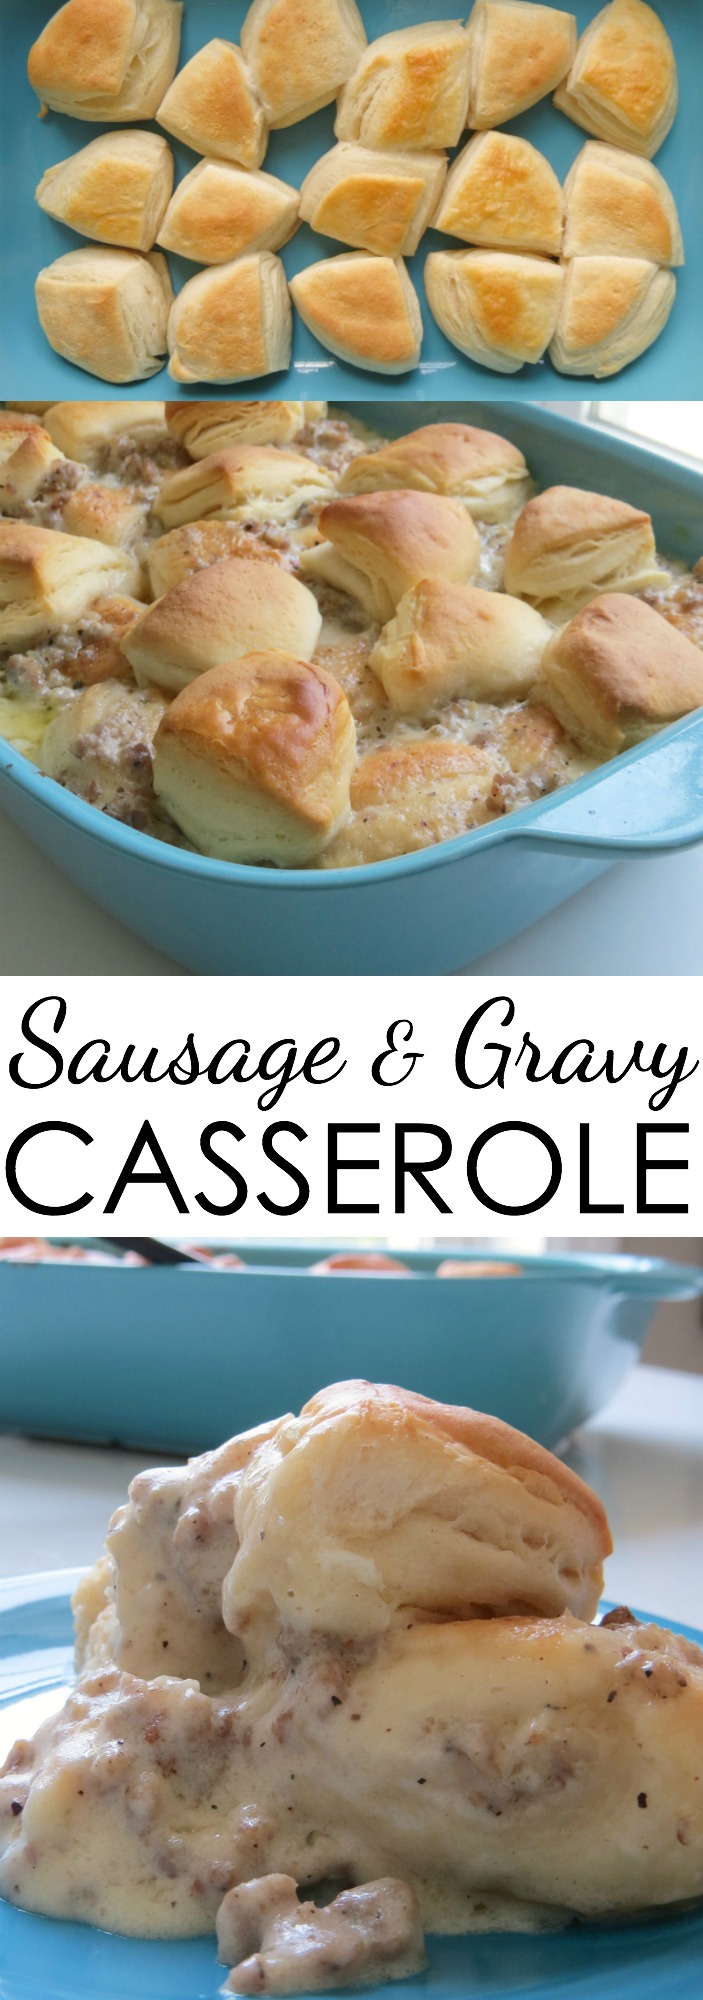 sausage and gravy casserole recipe